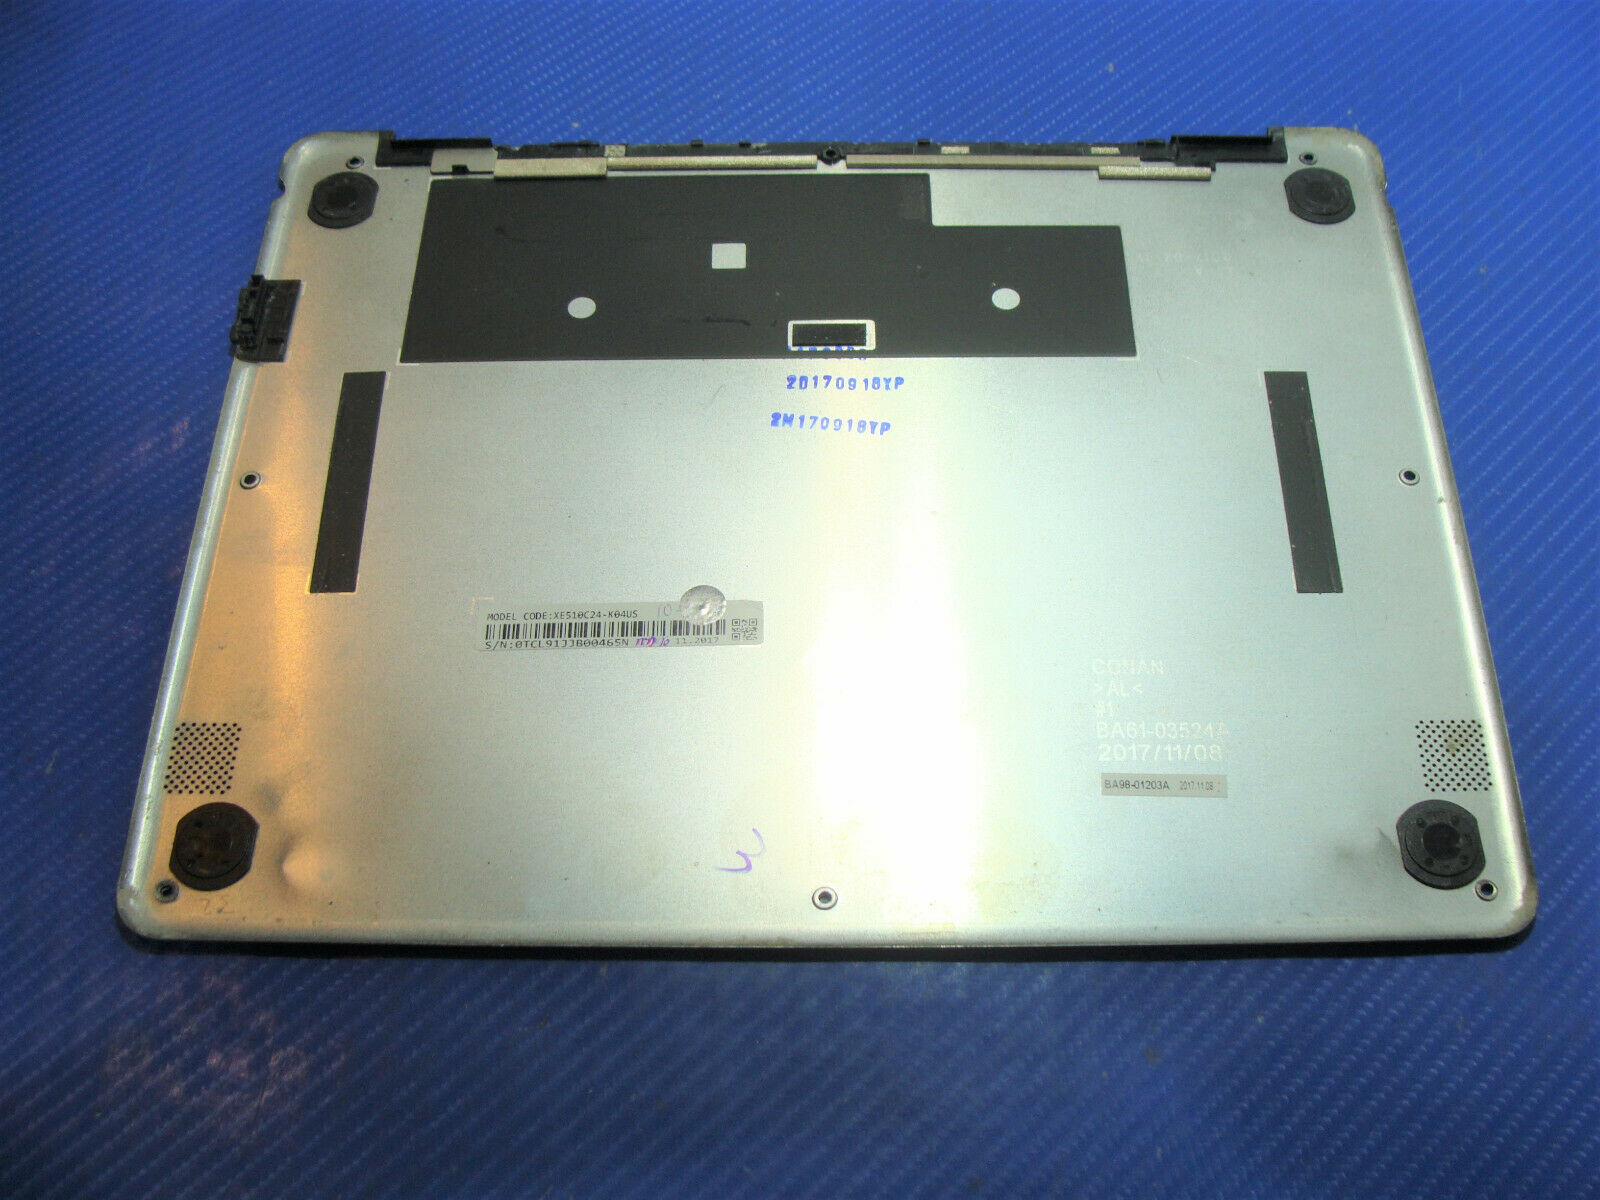 Samsung Chromebook Pro XE510C24-K04US 12.3